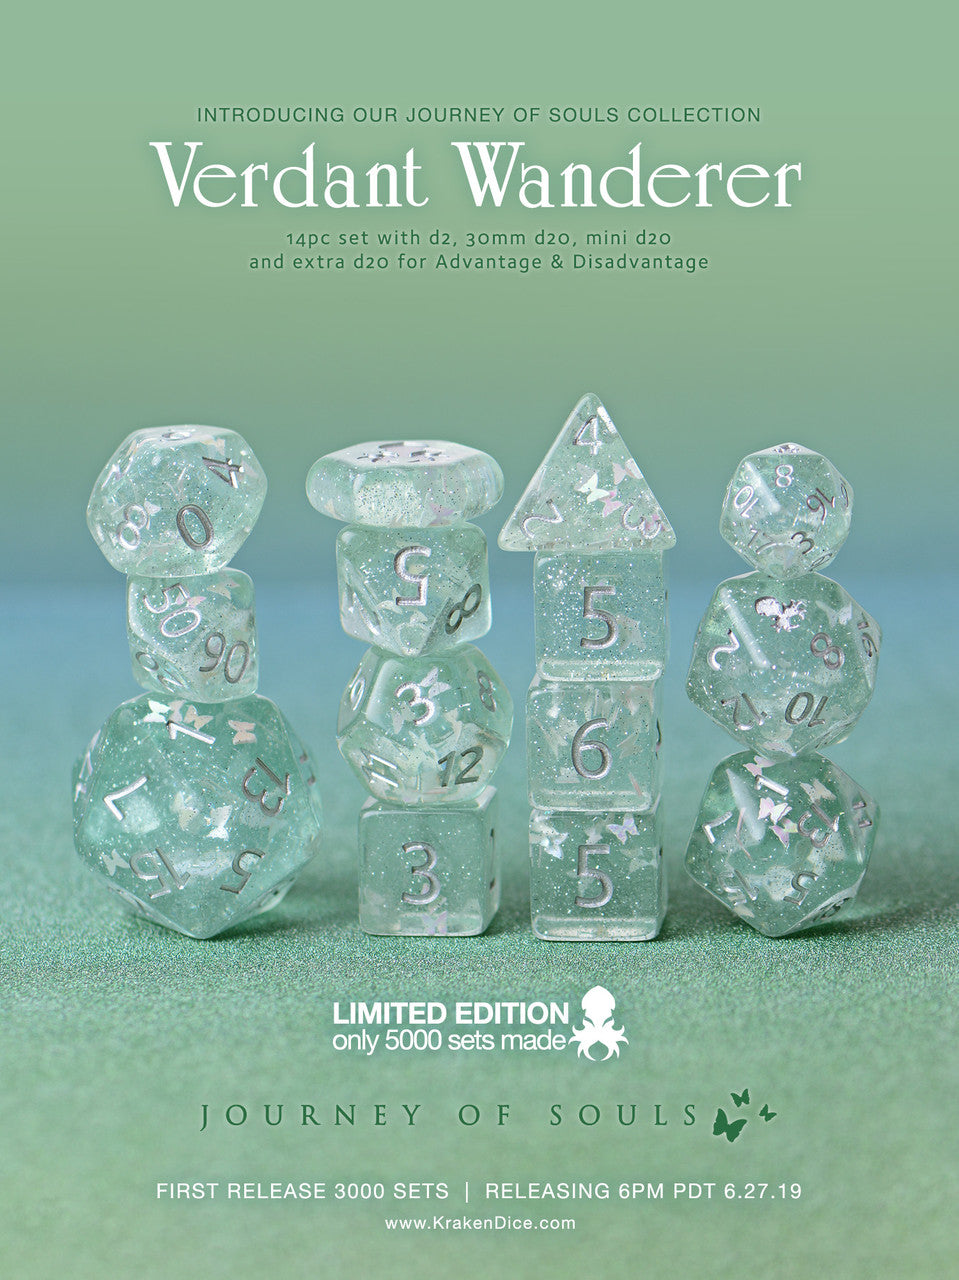 Verdant Wanderer 14pc Limited Edition Dice Set